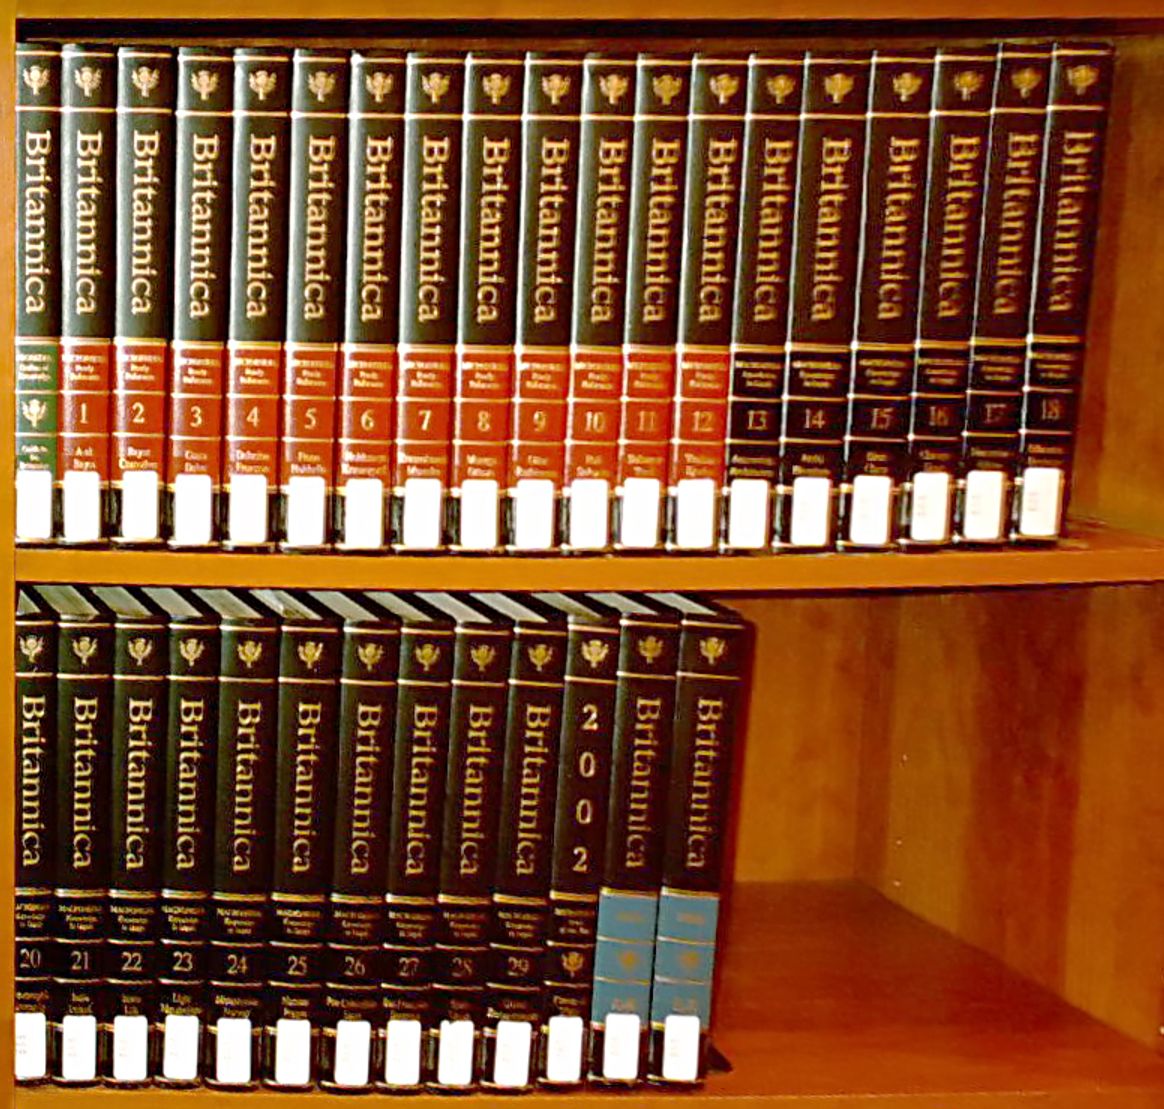 Image of the Encyclopaedia Britannica